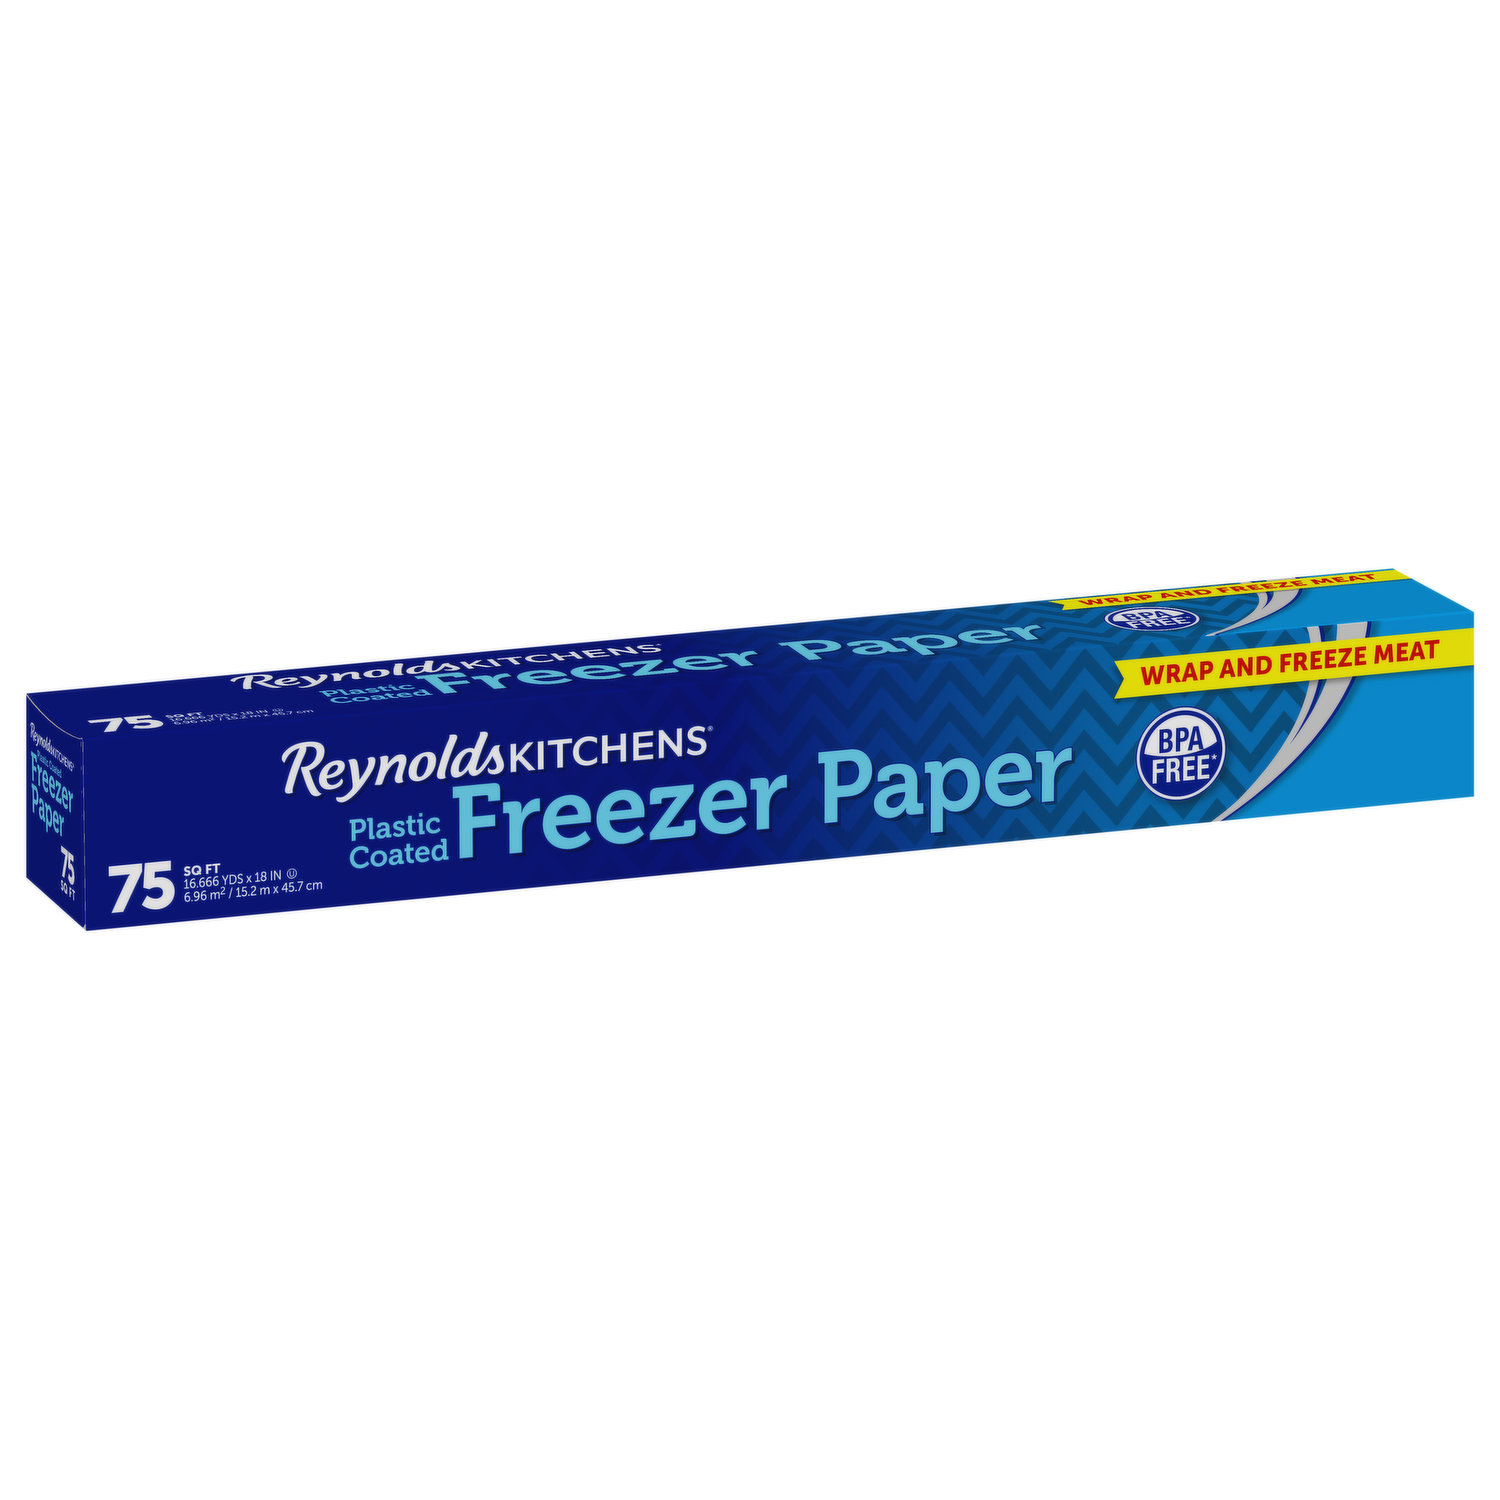 Reynolds Freezer Paper, Plastic Coated